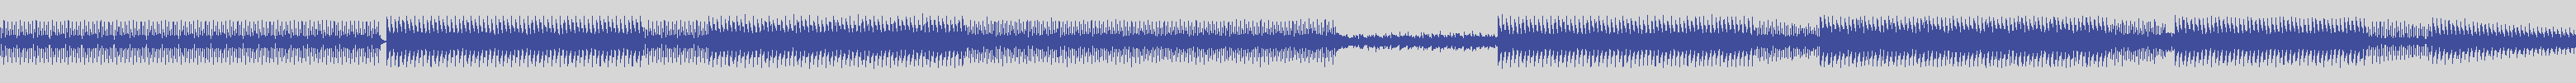 nf_boyz_records [NFY012] Jamie Sansone - Litorale [Original Mix] audio wave form